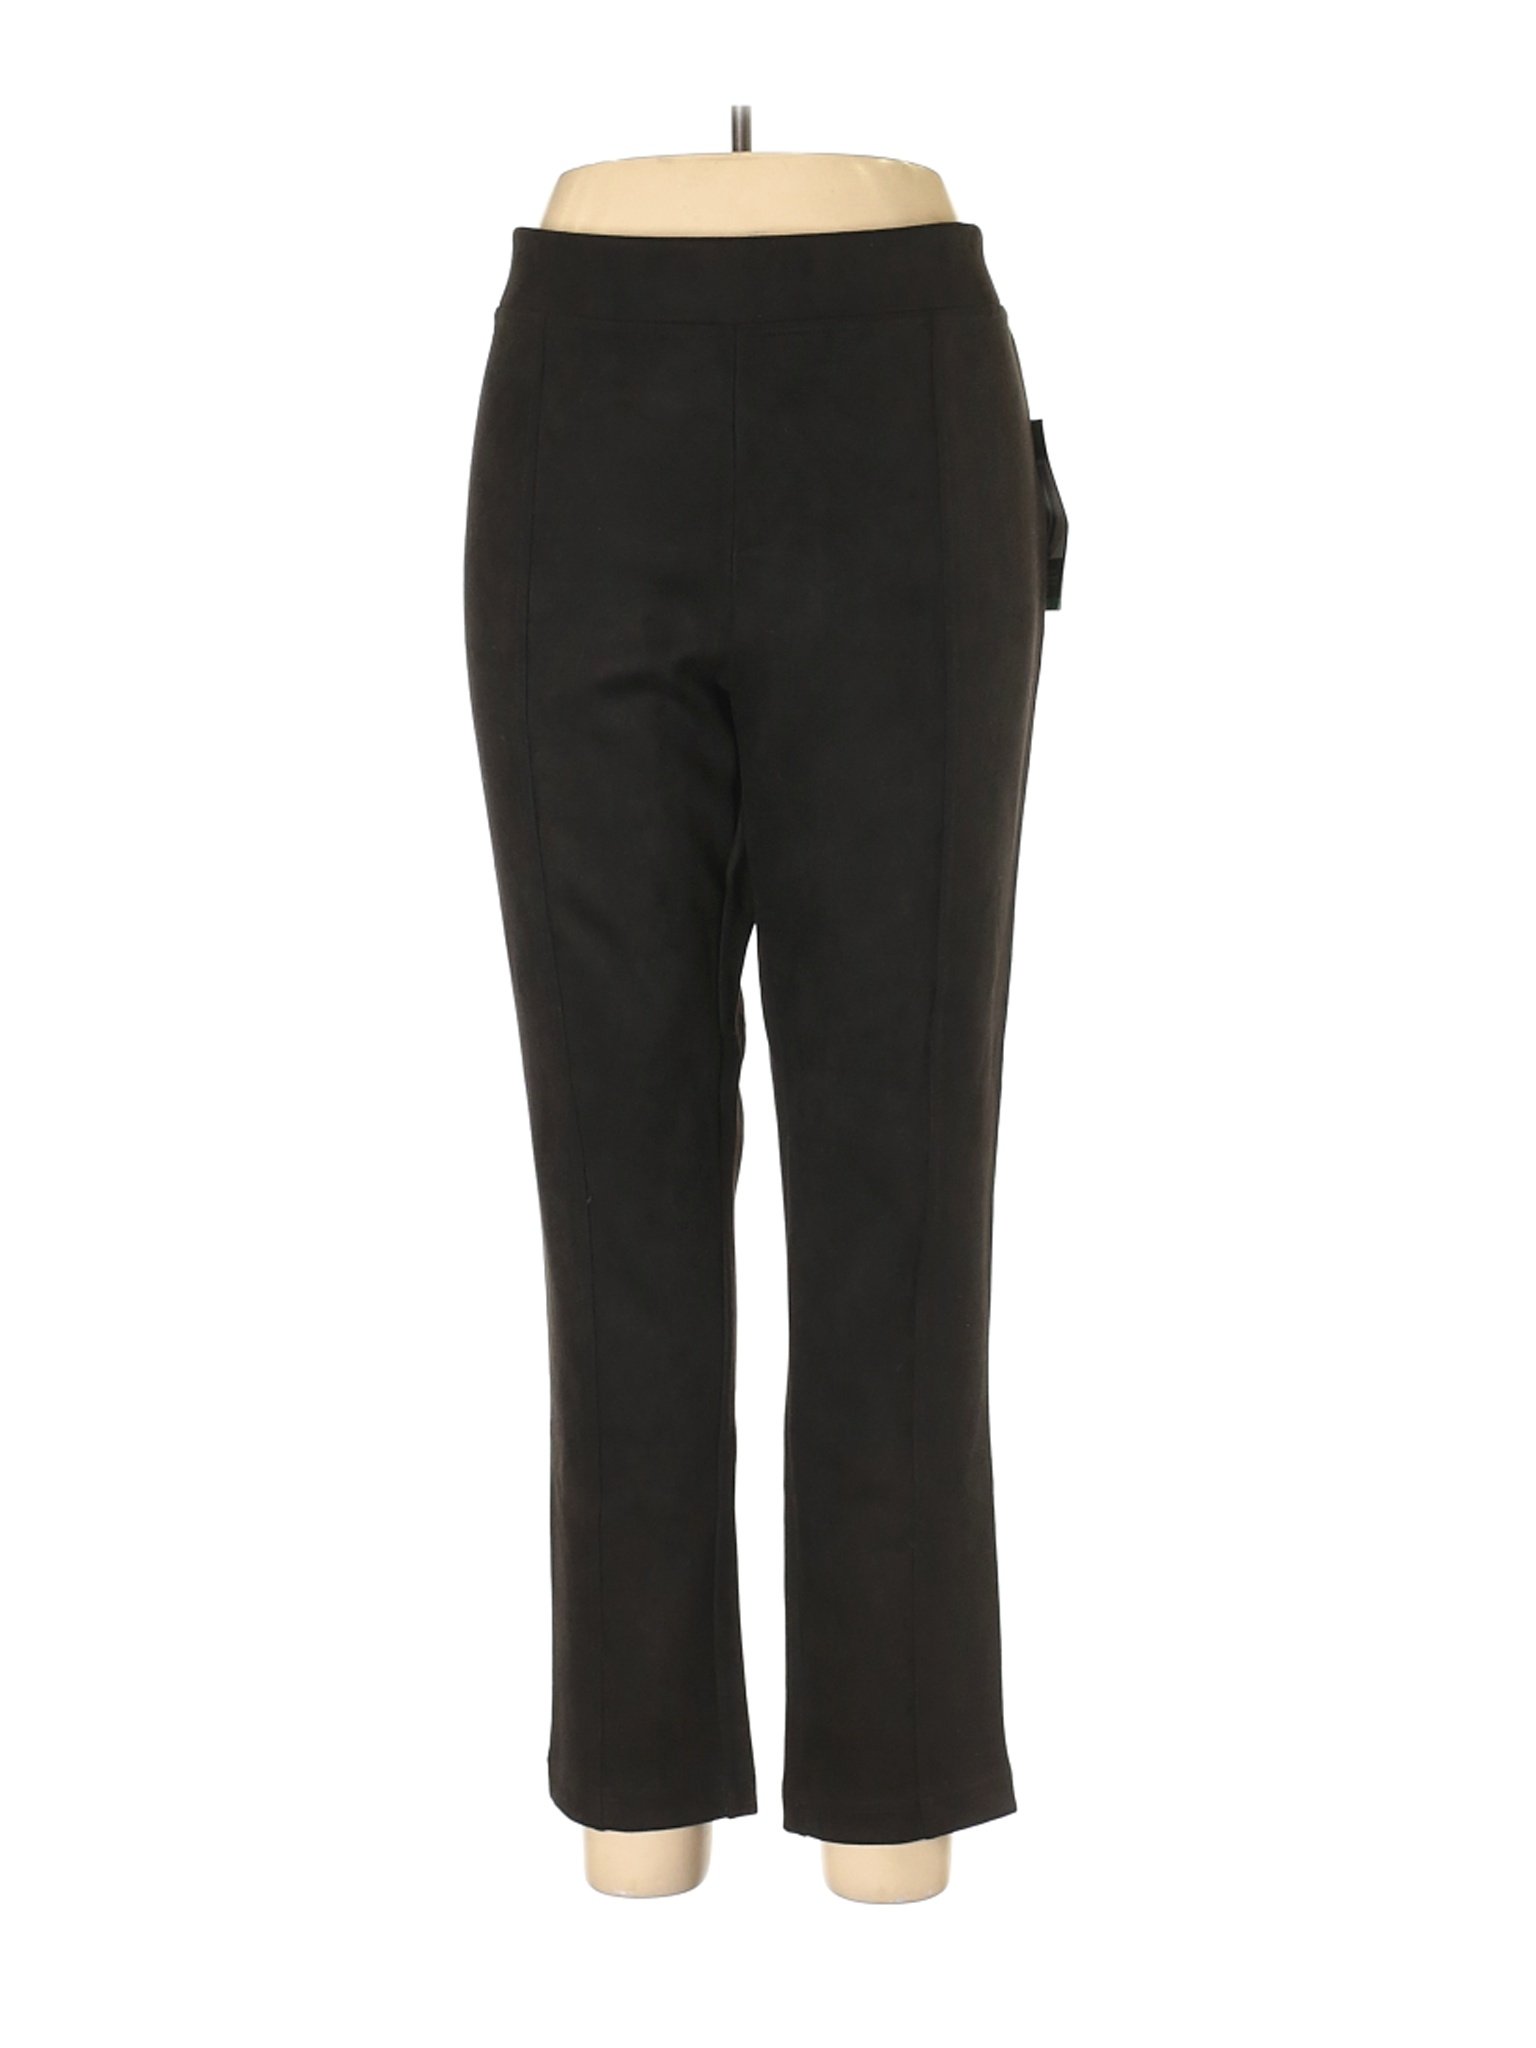 NWT Andrew Marc Women Black Casual Pants XL | eBay